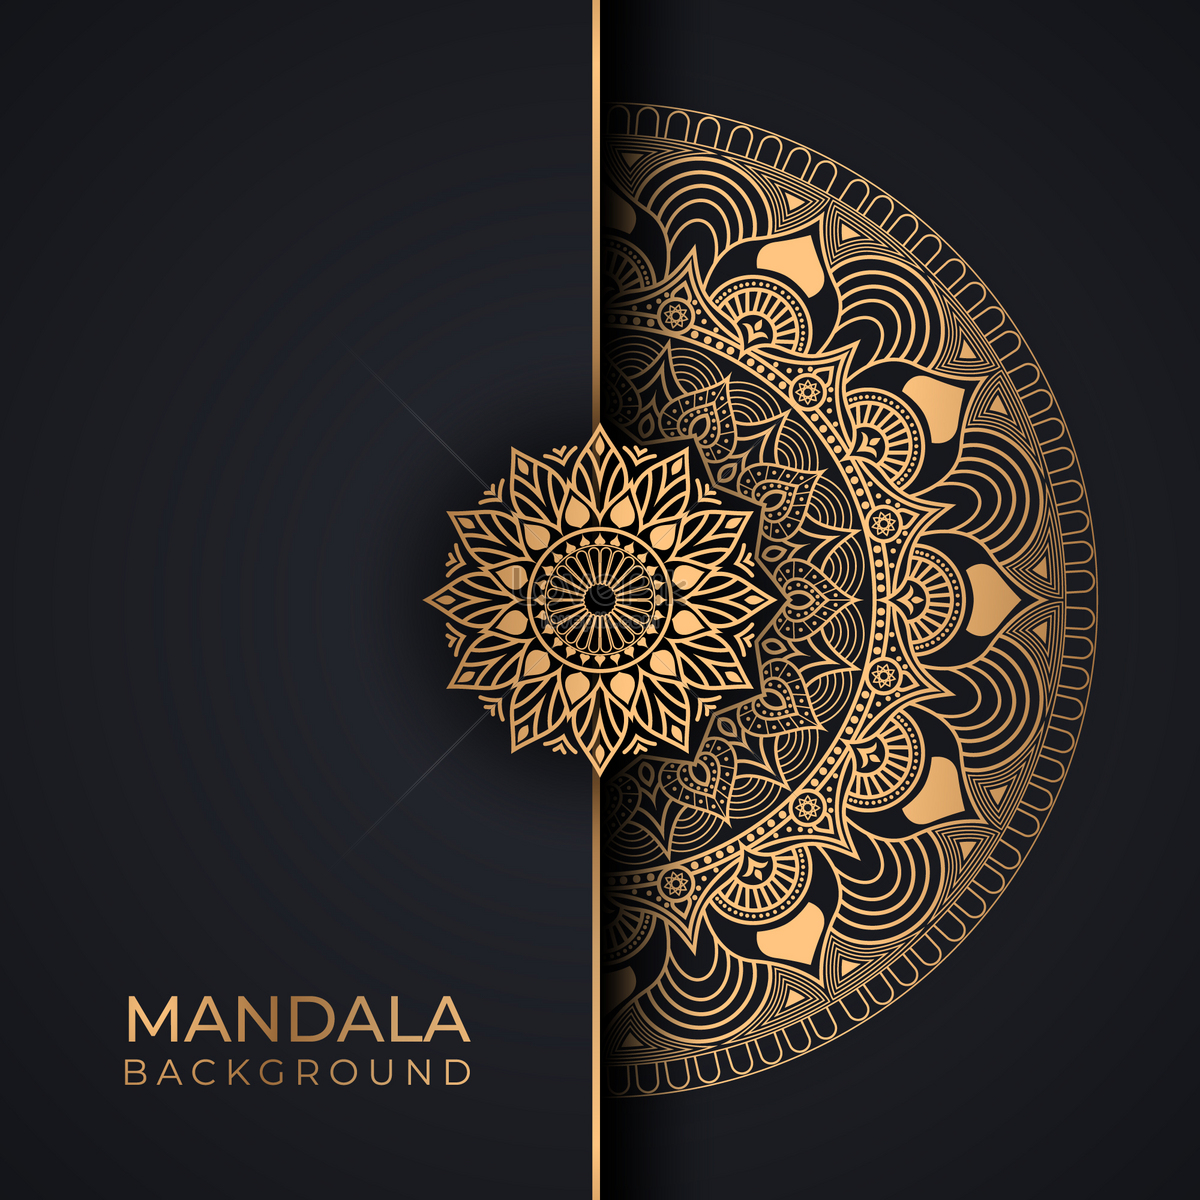 Indian Luxury Mandala Background Design Download Free | Banner Background  Image on Lovepik | 450075911